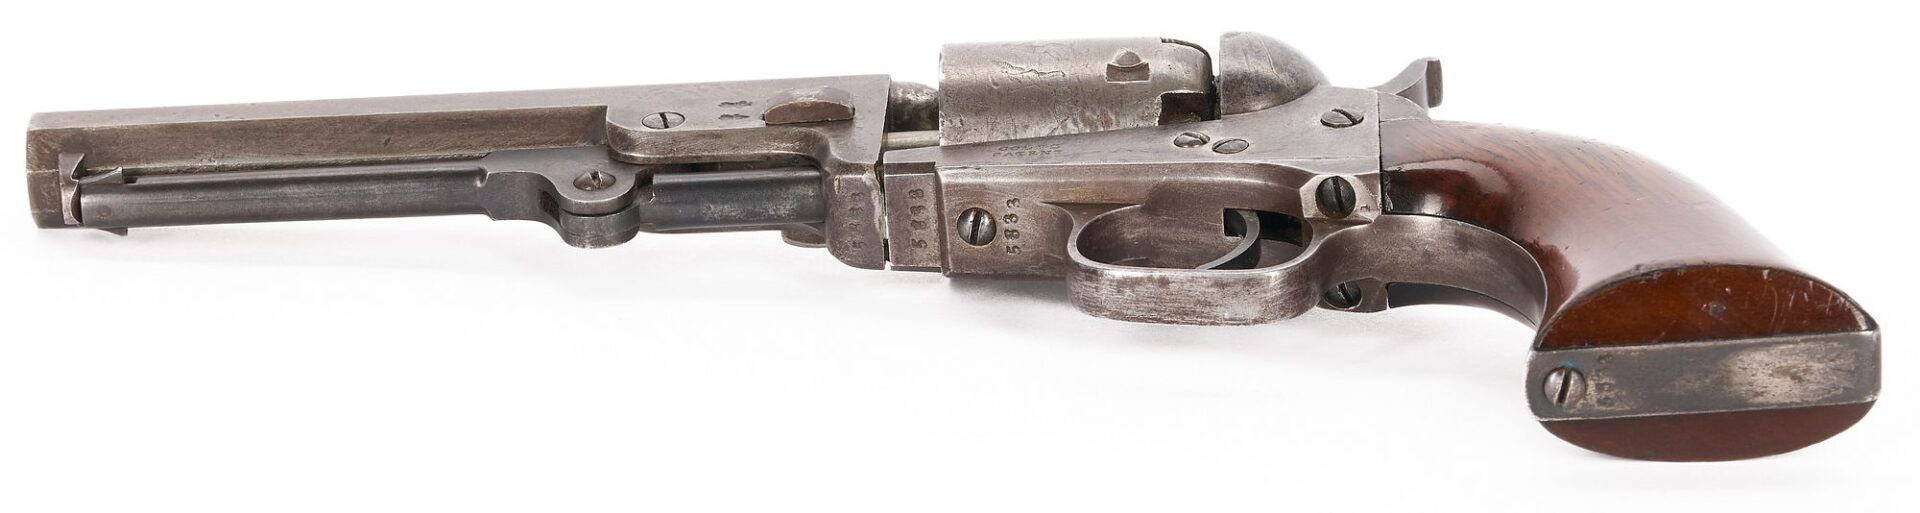 Lot 545: Cased Colt Model 1849 London Pocket Percussion Revolver